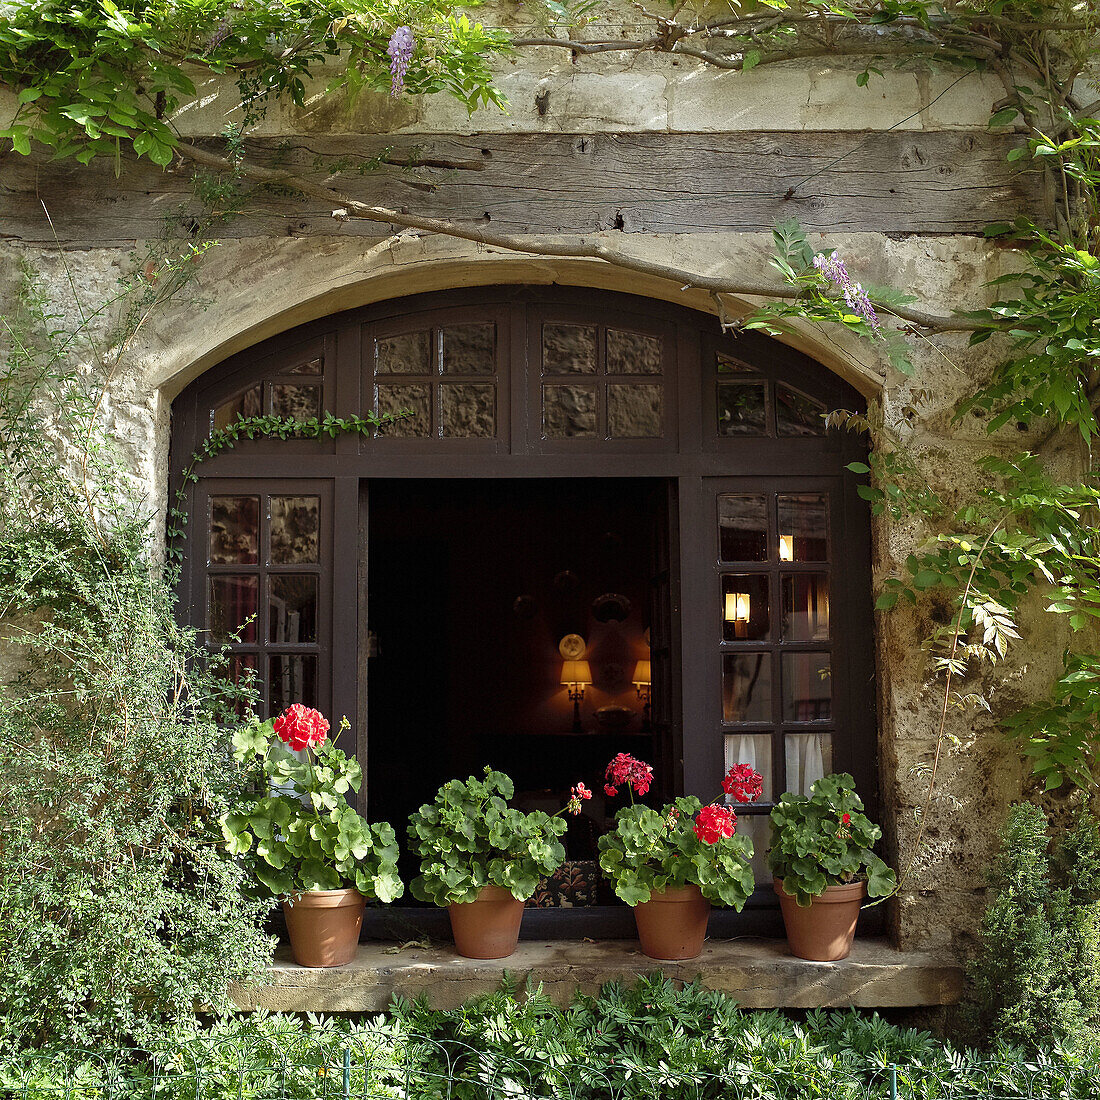 Restaurant window and flowers. Medieval city of Pérouges. Rhône Valley. France.